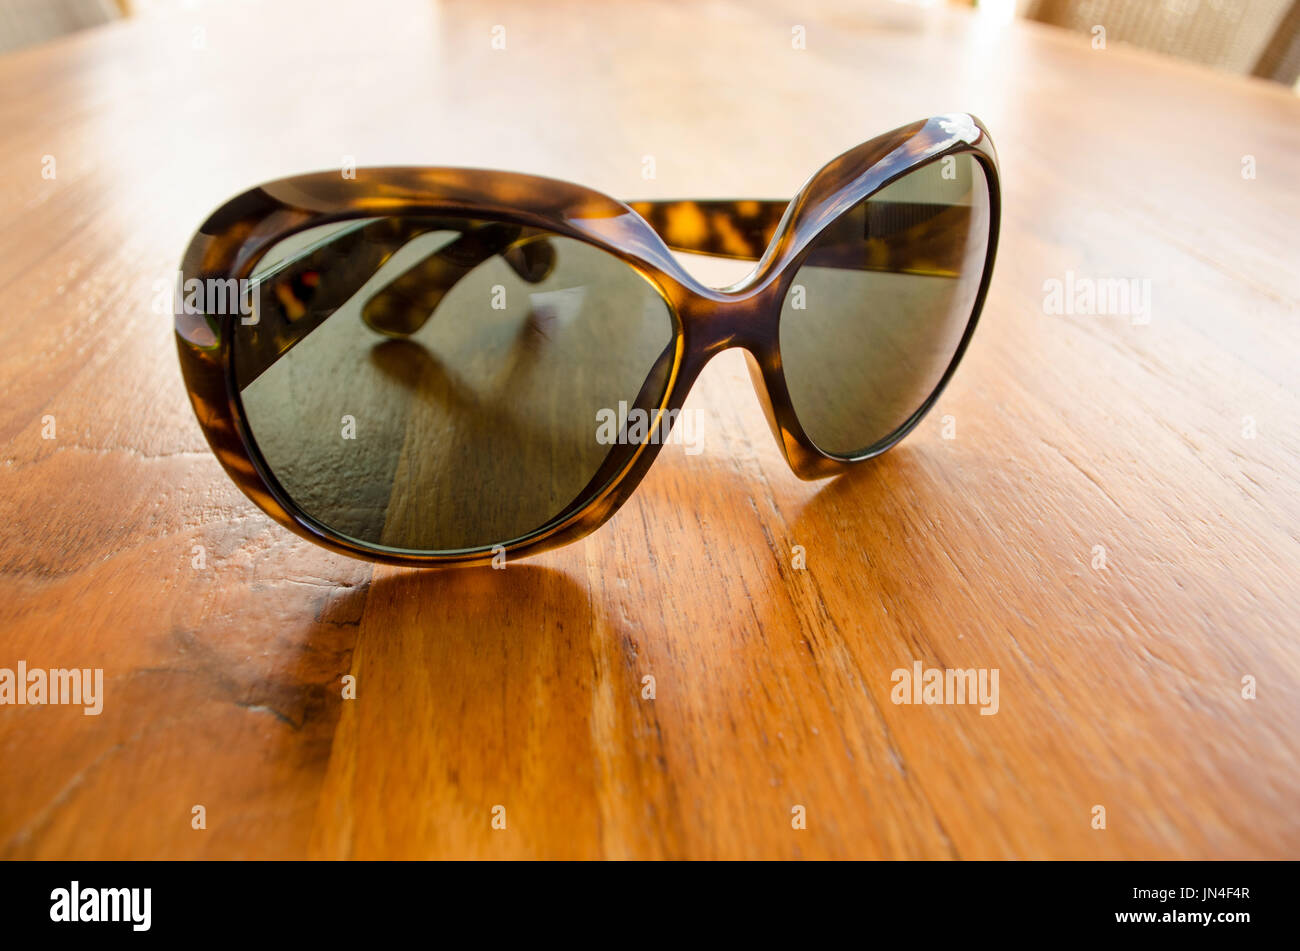 Stylish Sunglasses on Wood Table Stock Photo